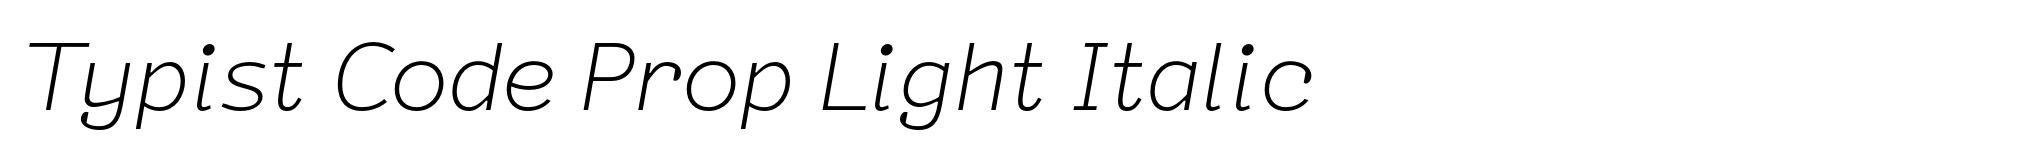 Typist Code Prop Light Italic image